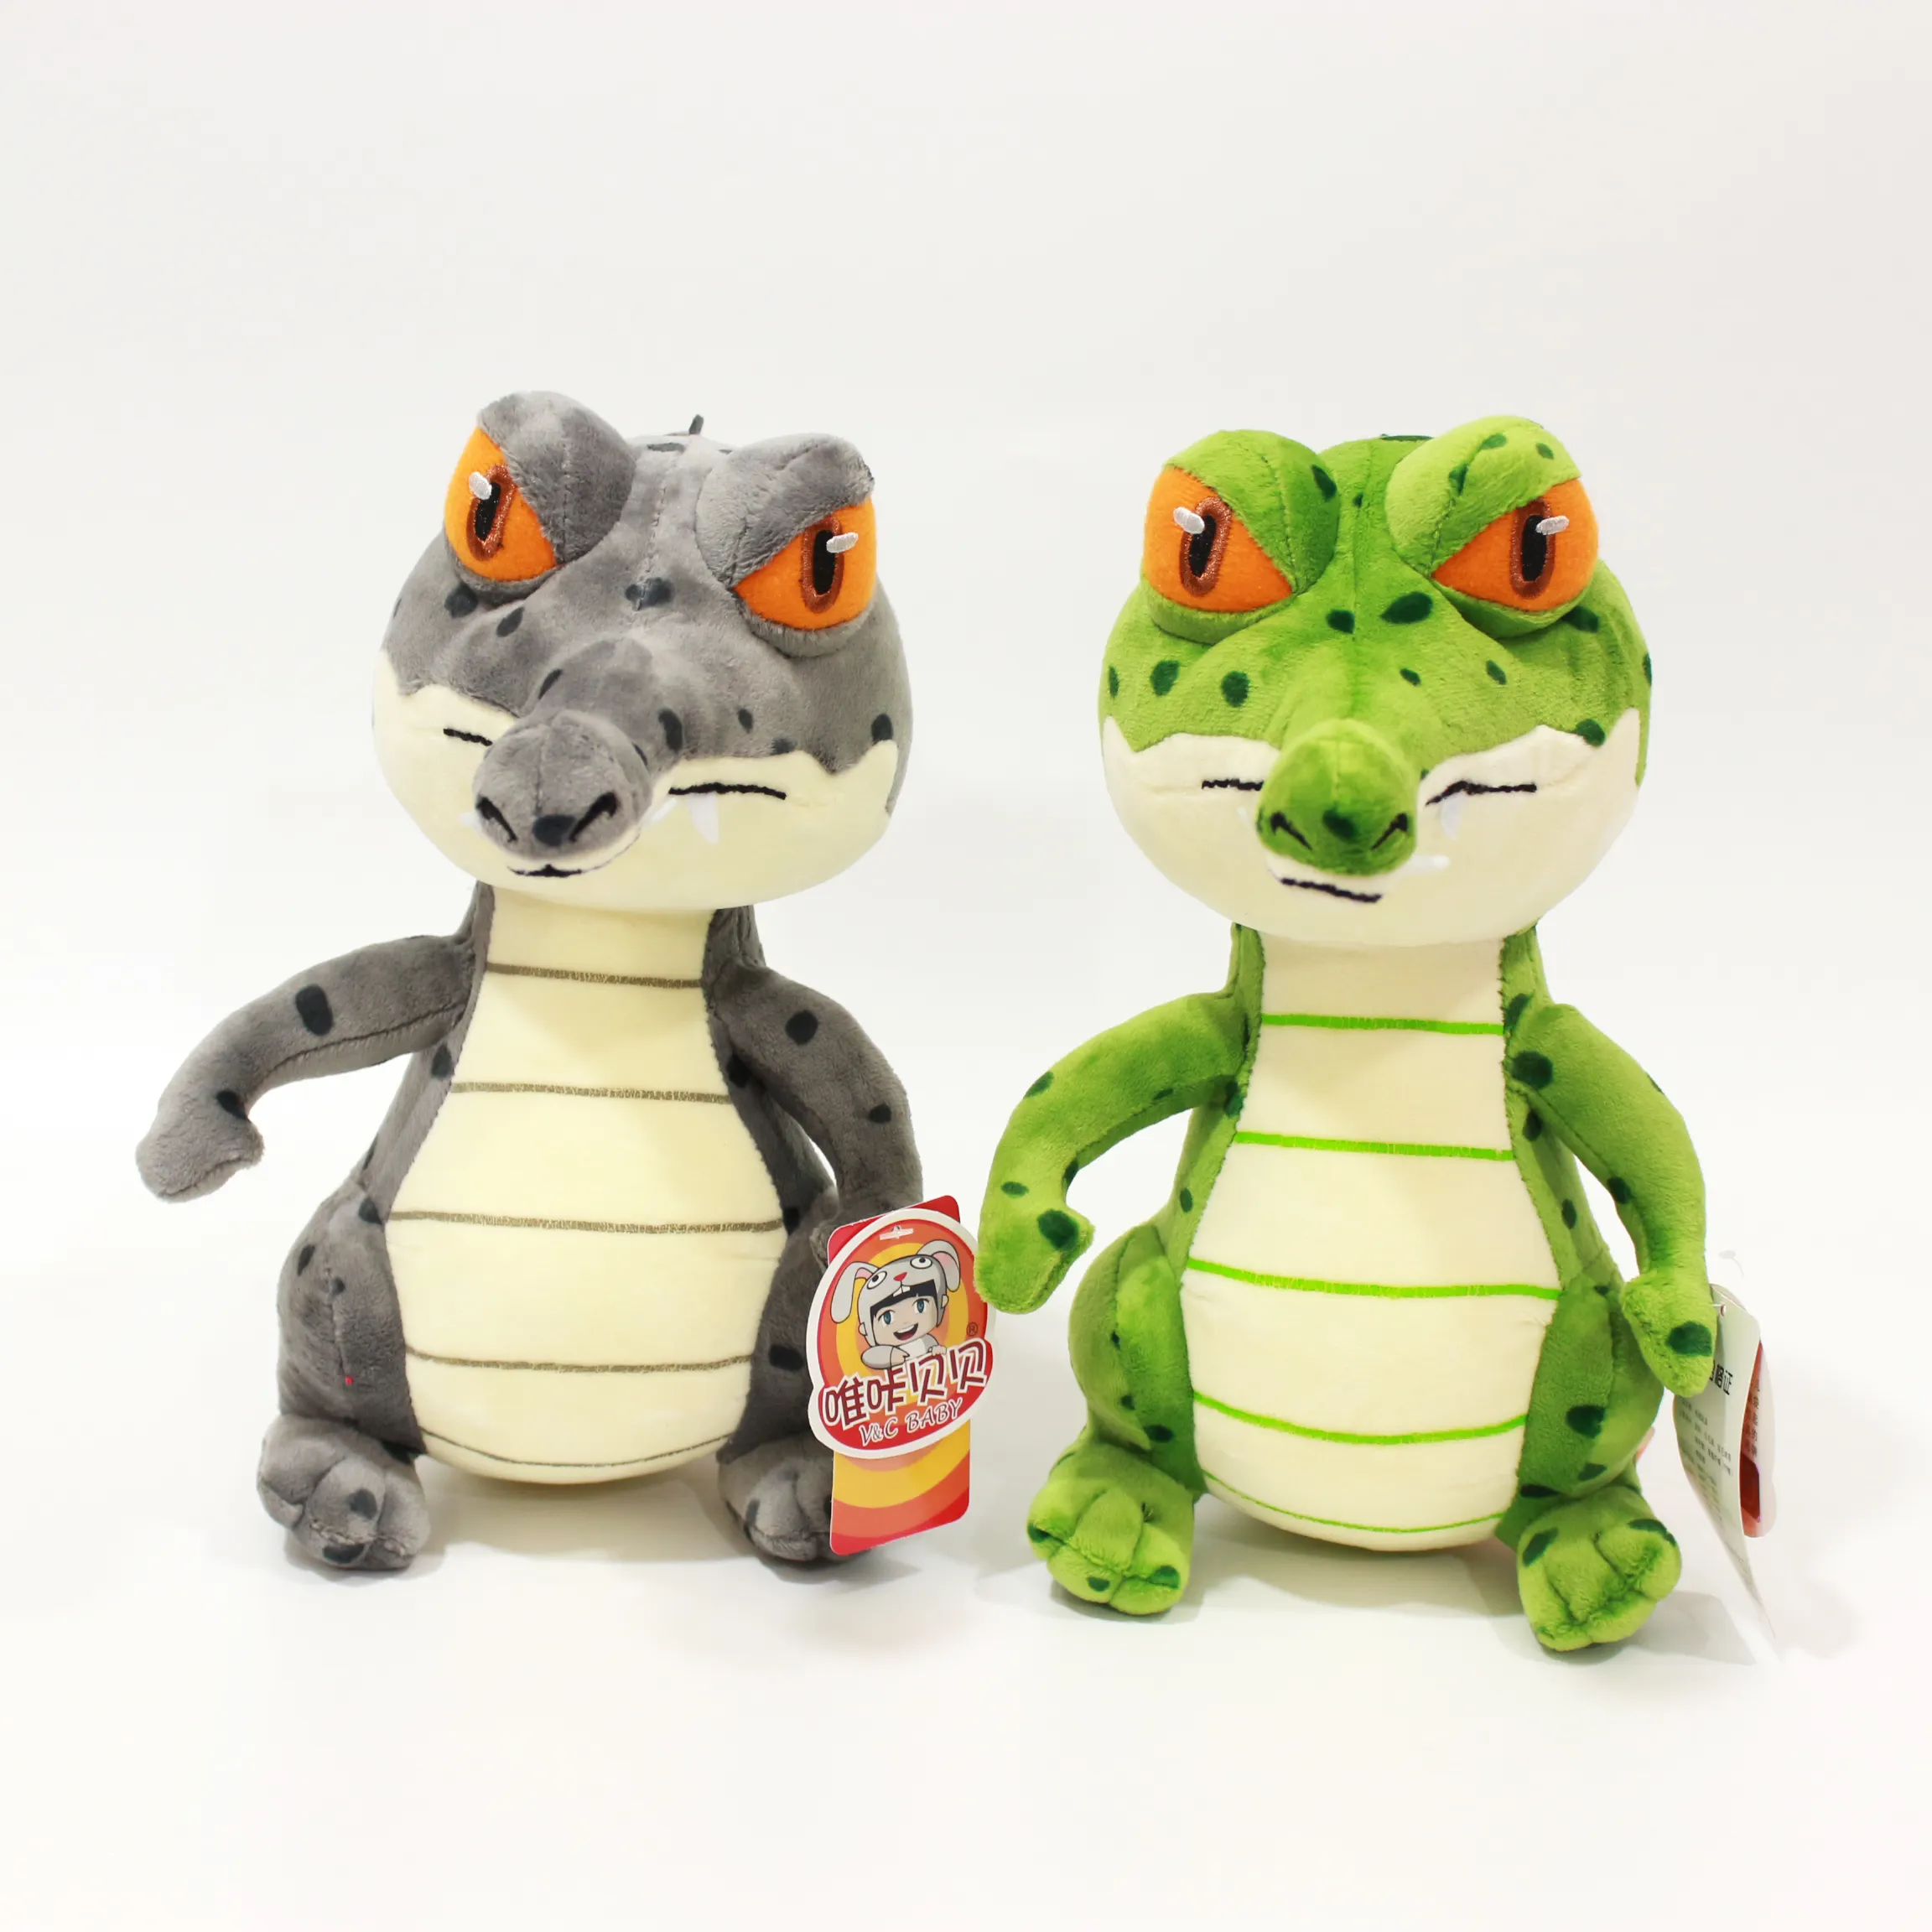 Soft dinosaur green crocodile Stuffed Animal Plush Toy